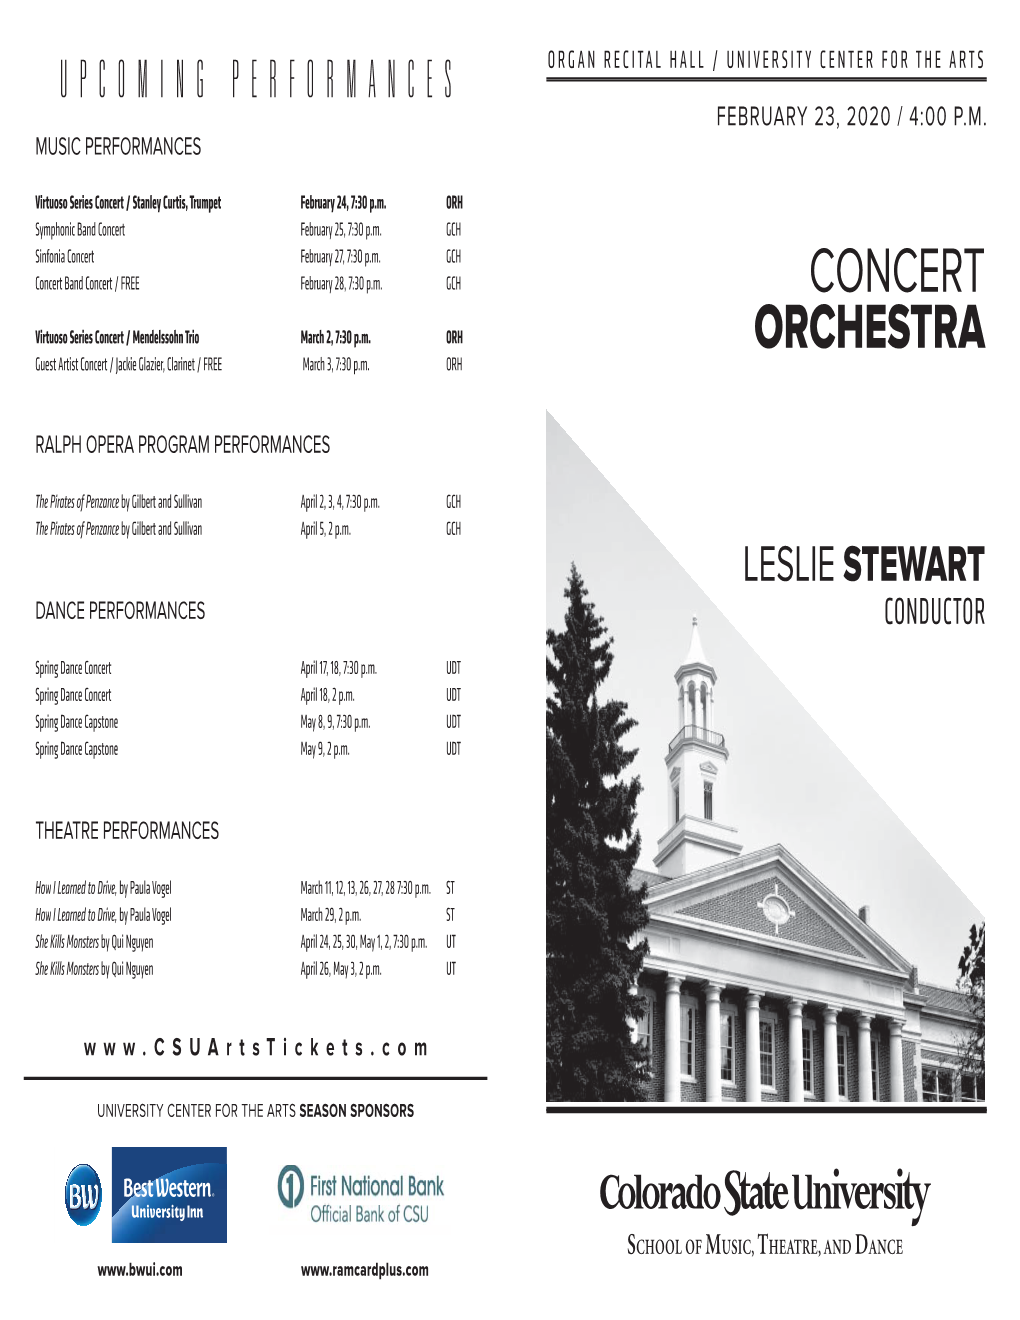 Concert Orchestra.Indd